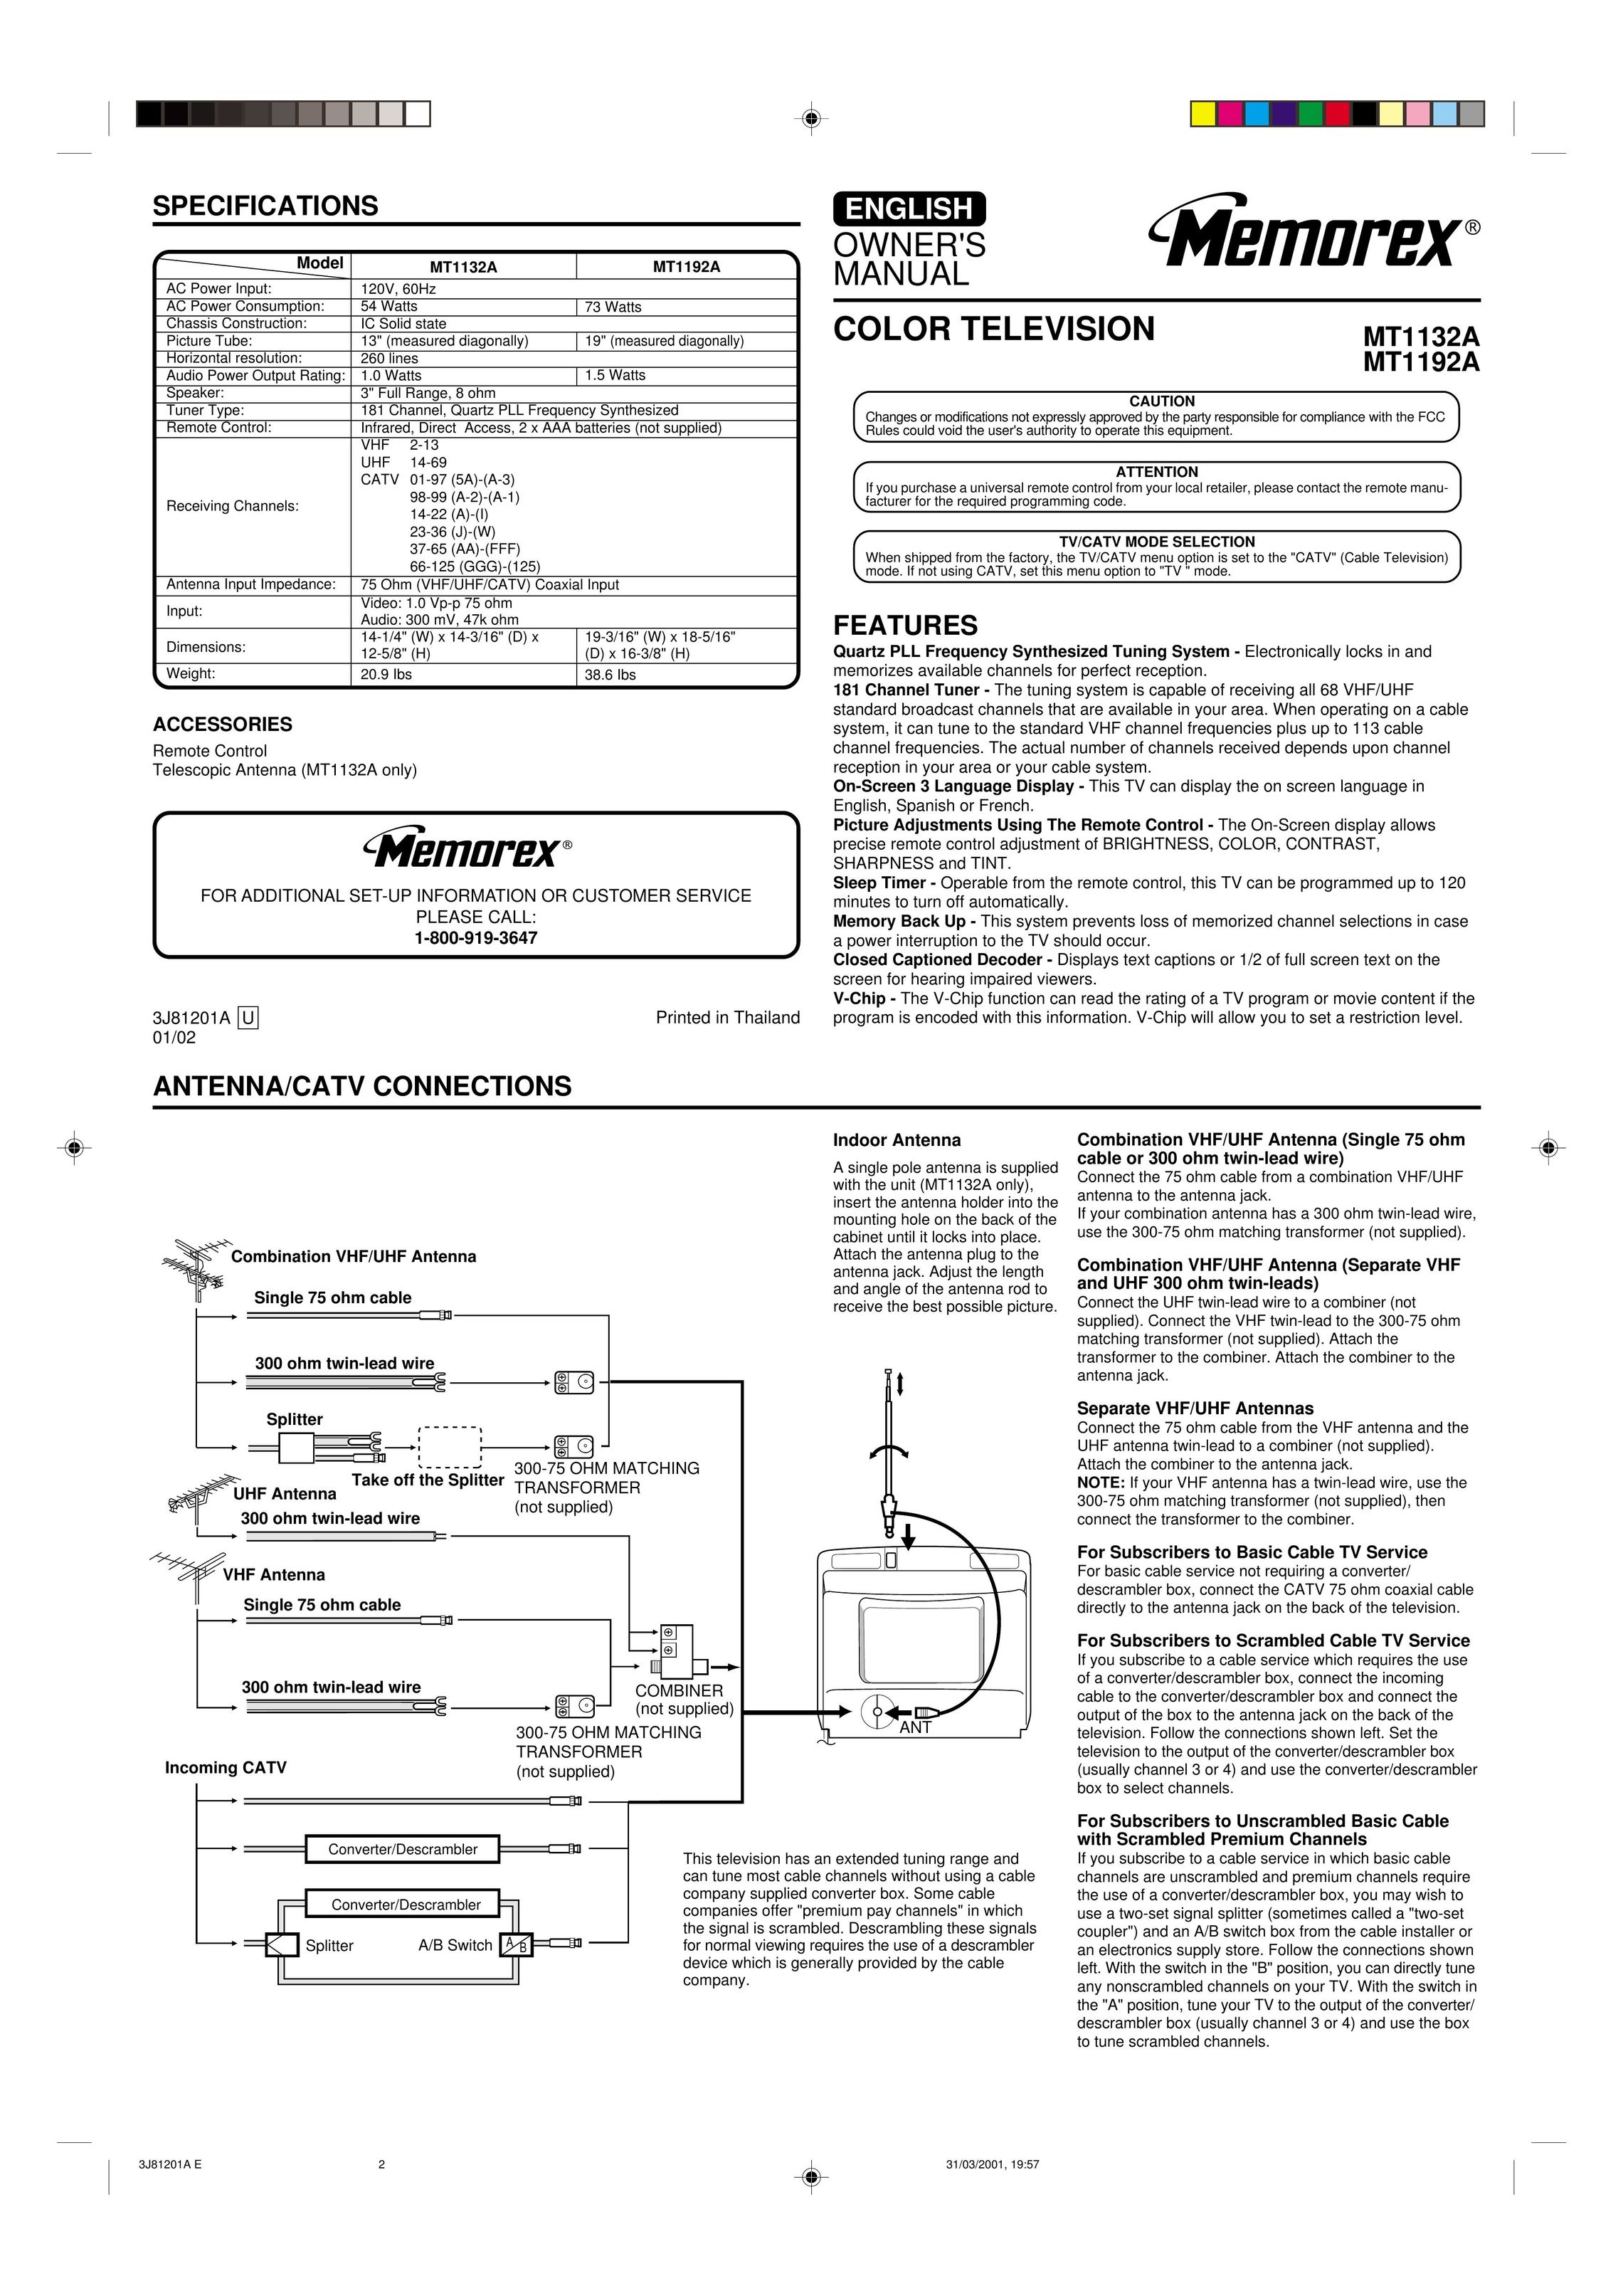 Memorex MT1192A CRT Television User Manual